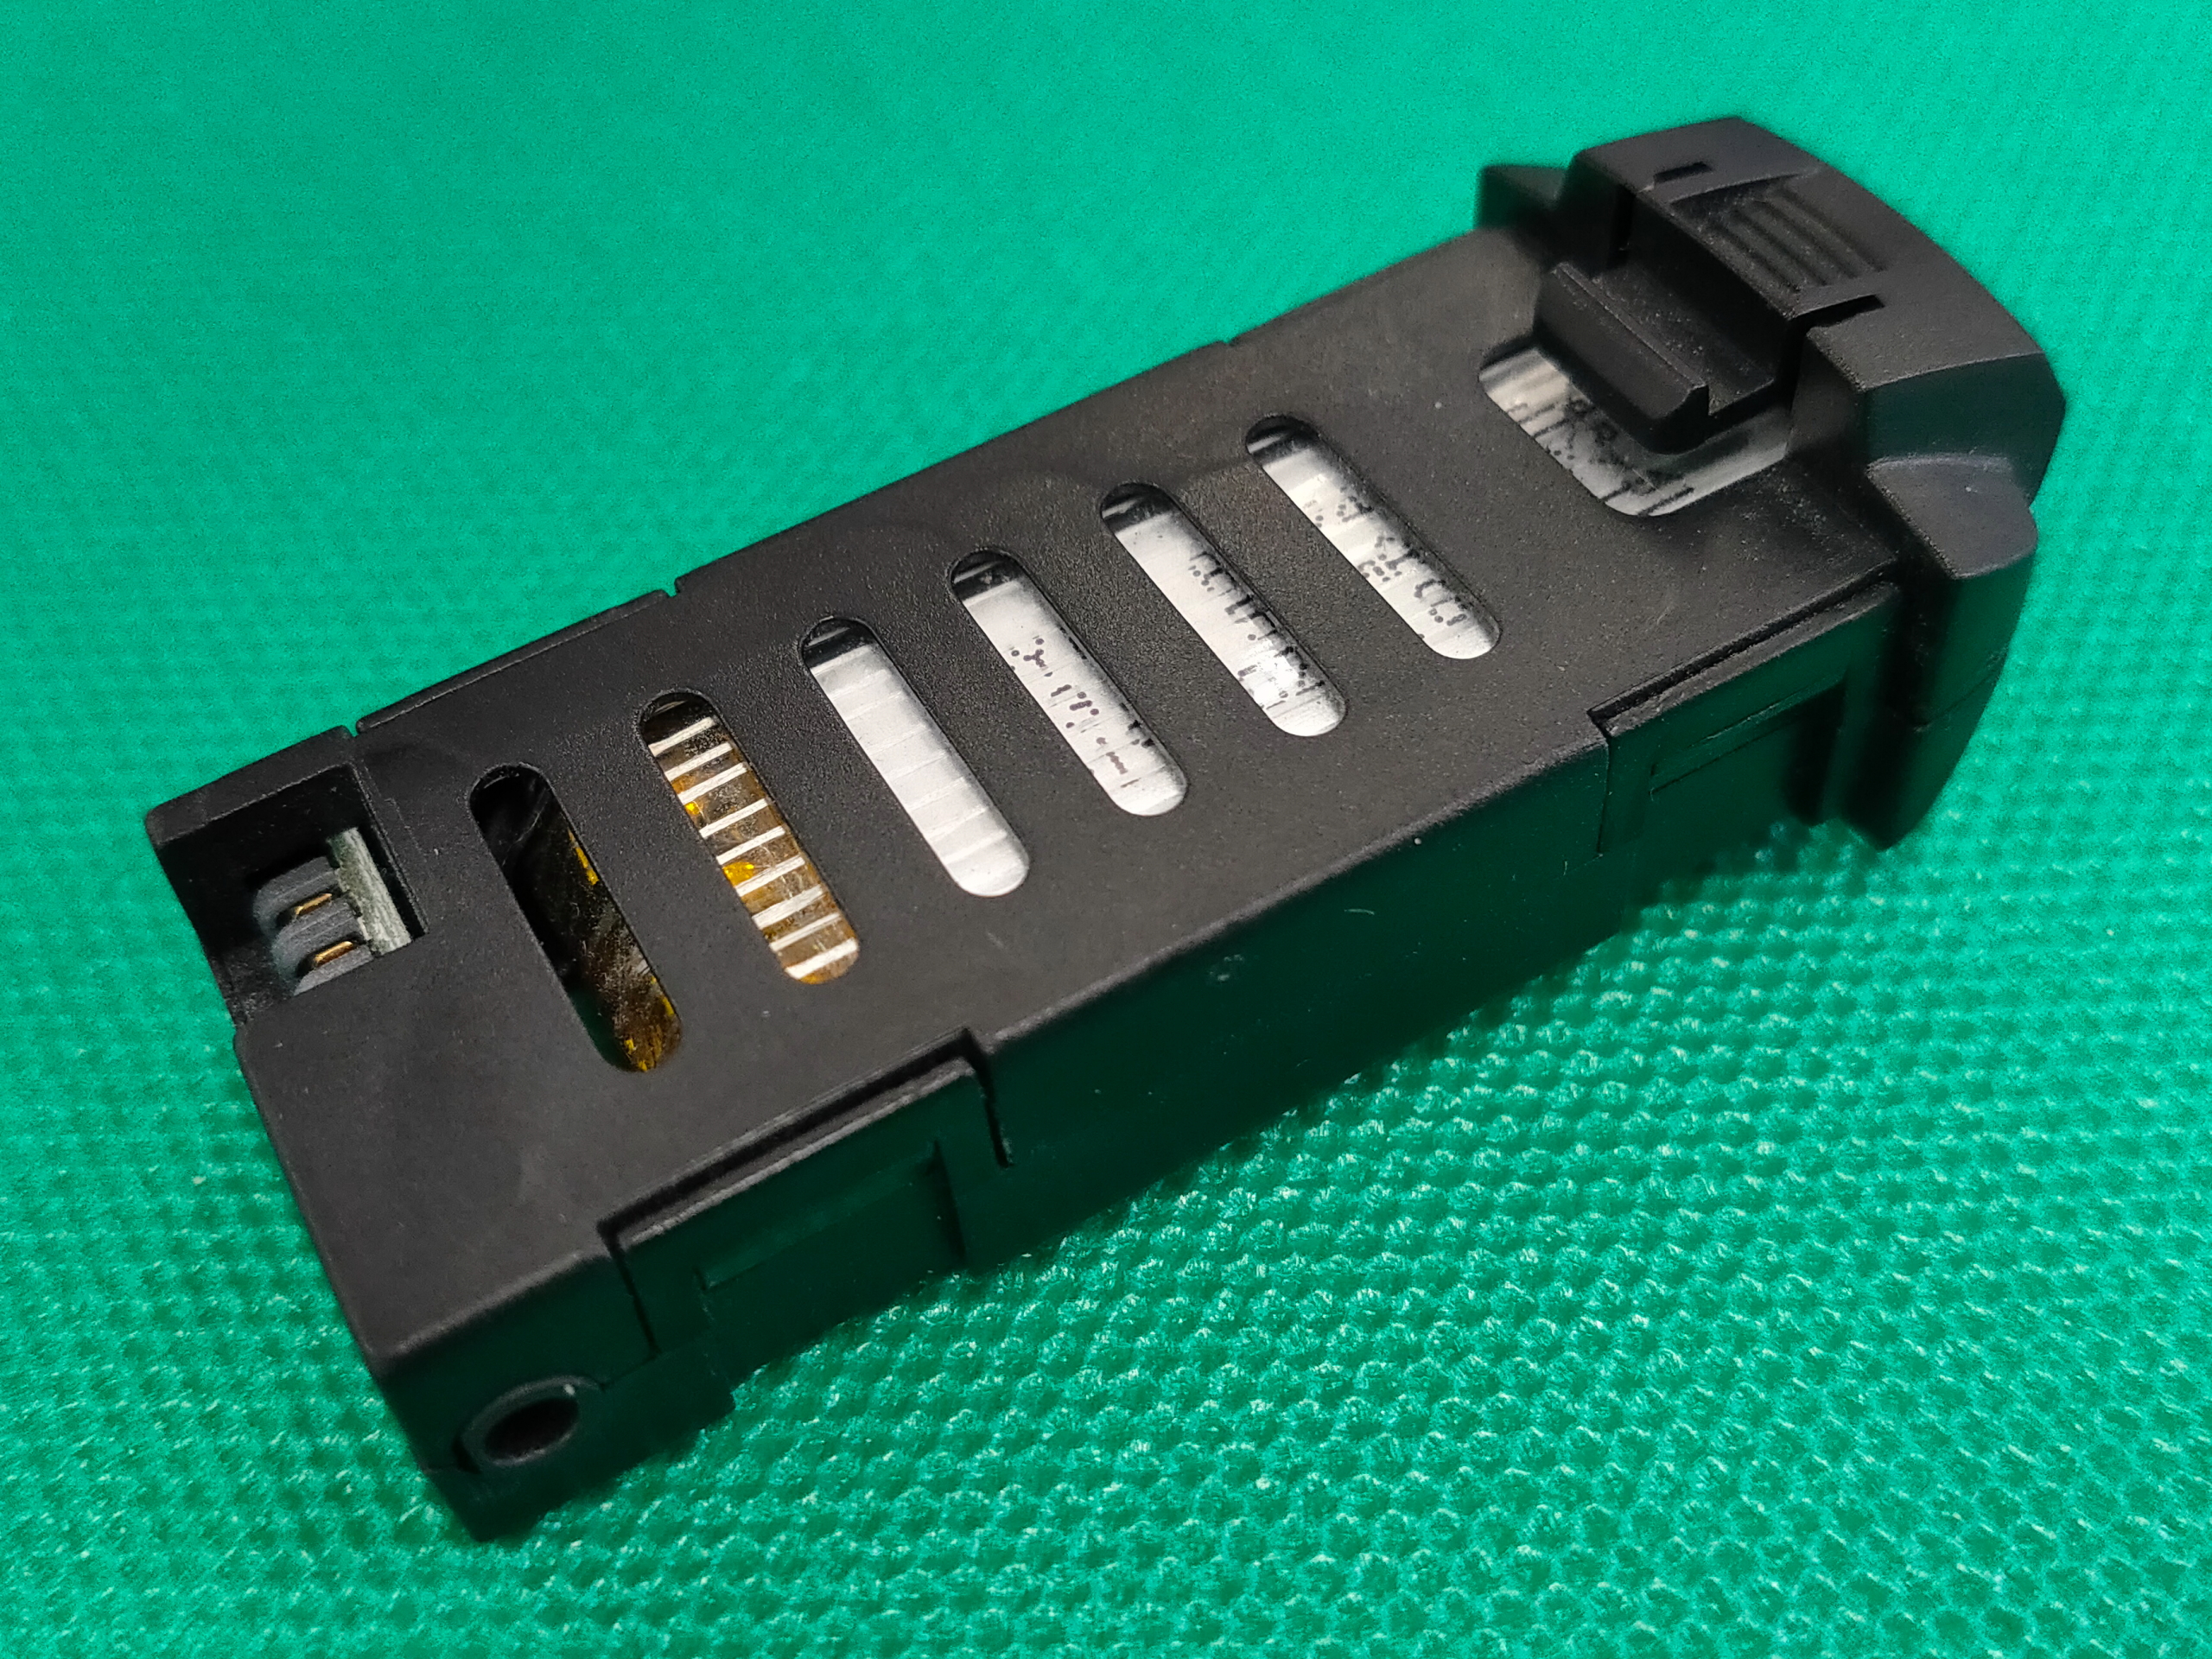 LiPo battery in a light plastic shell